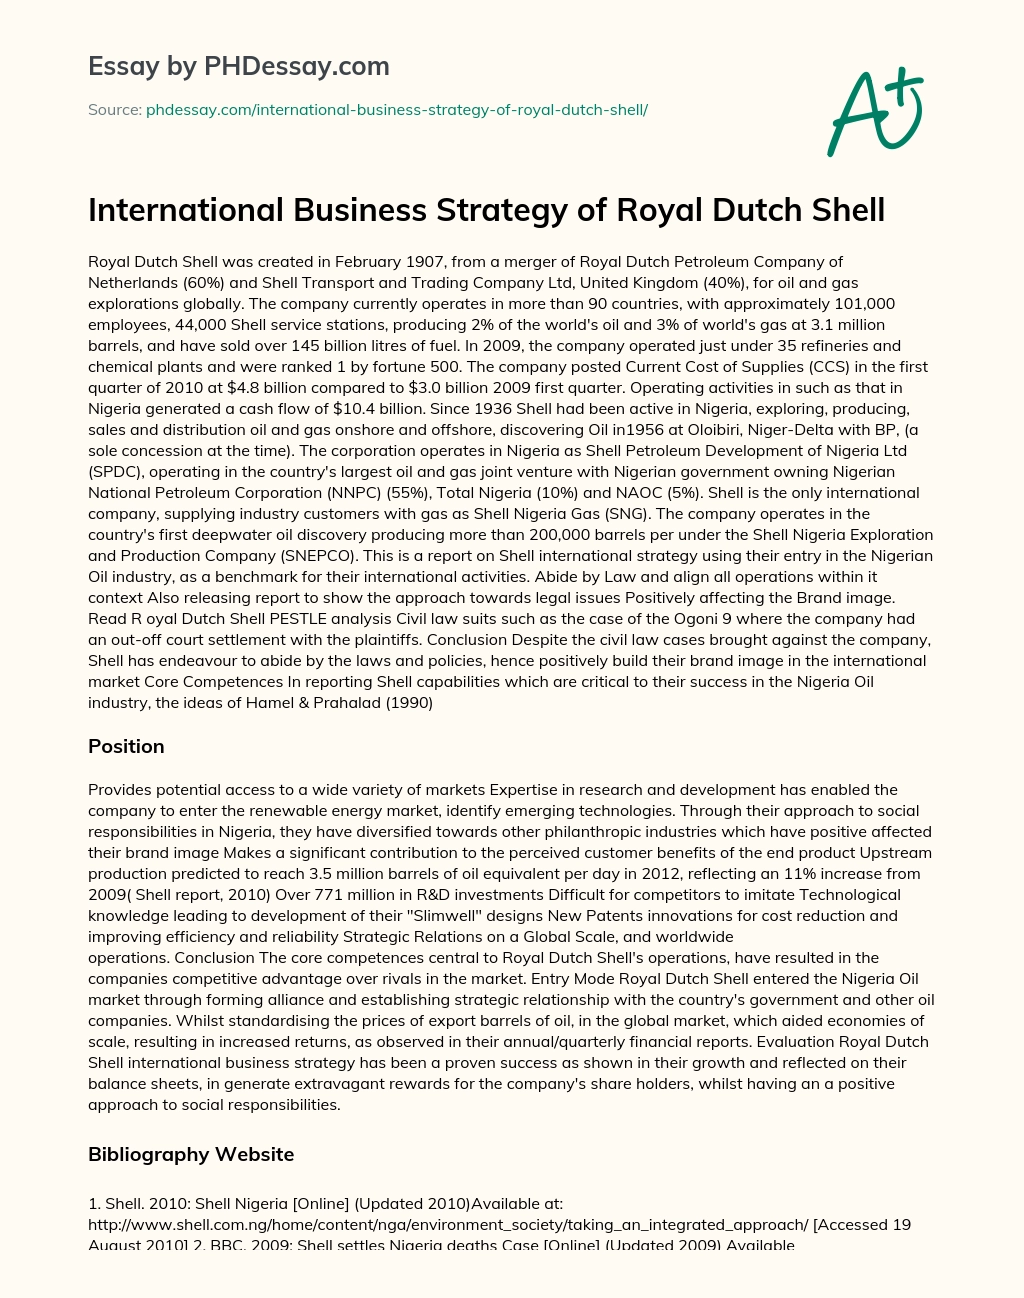 International Business Strategy of Royal Dutch Shell essay